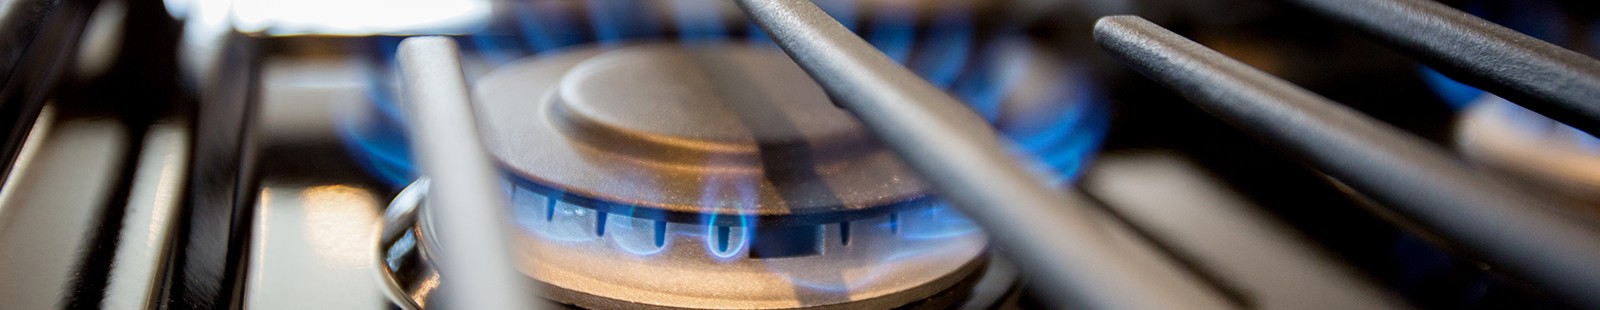 Up-close of gas burner